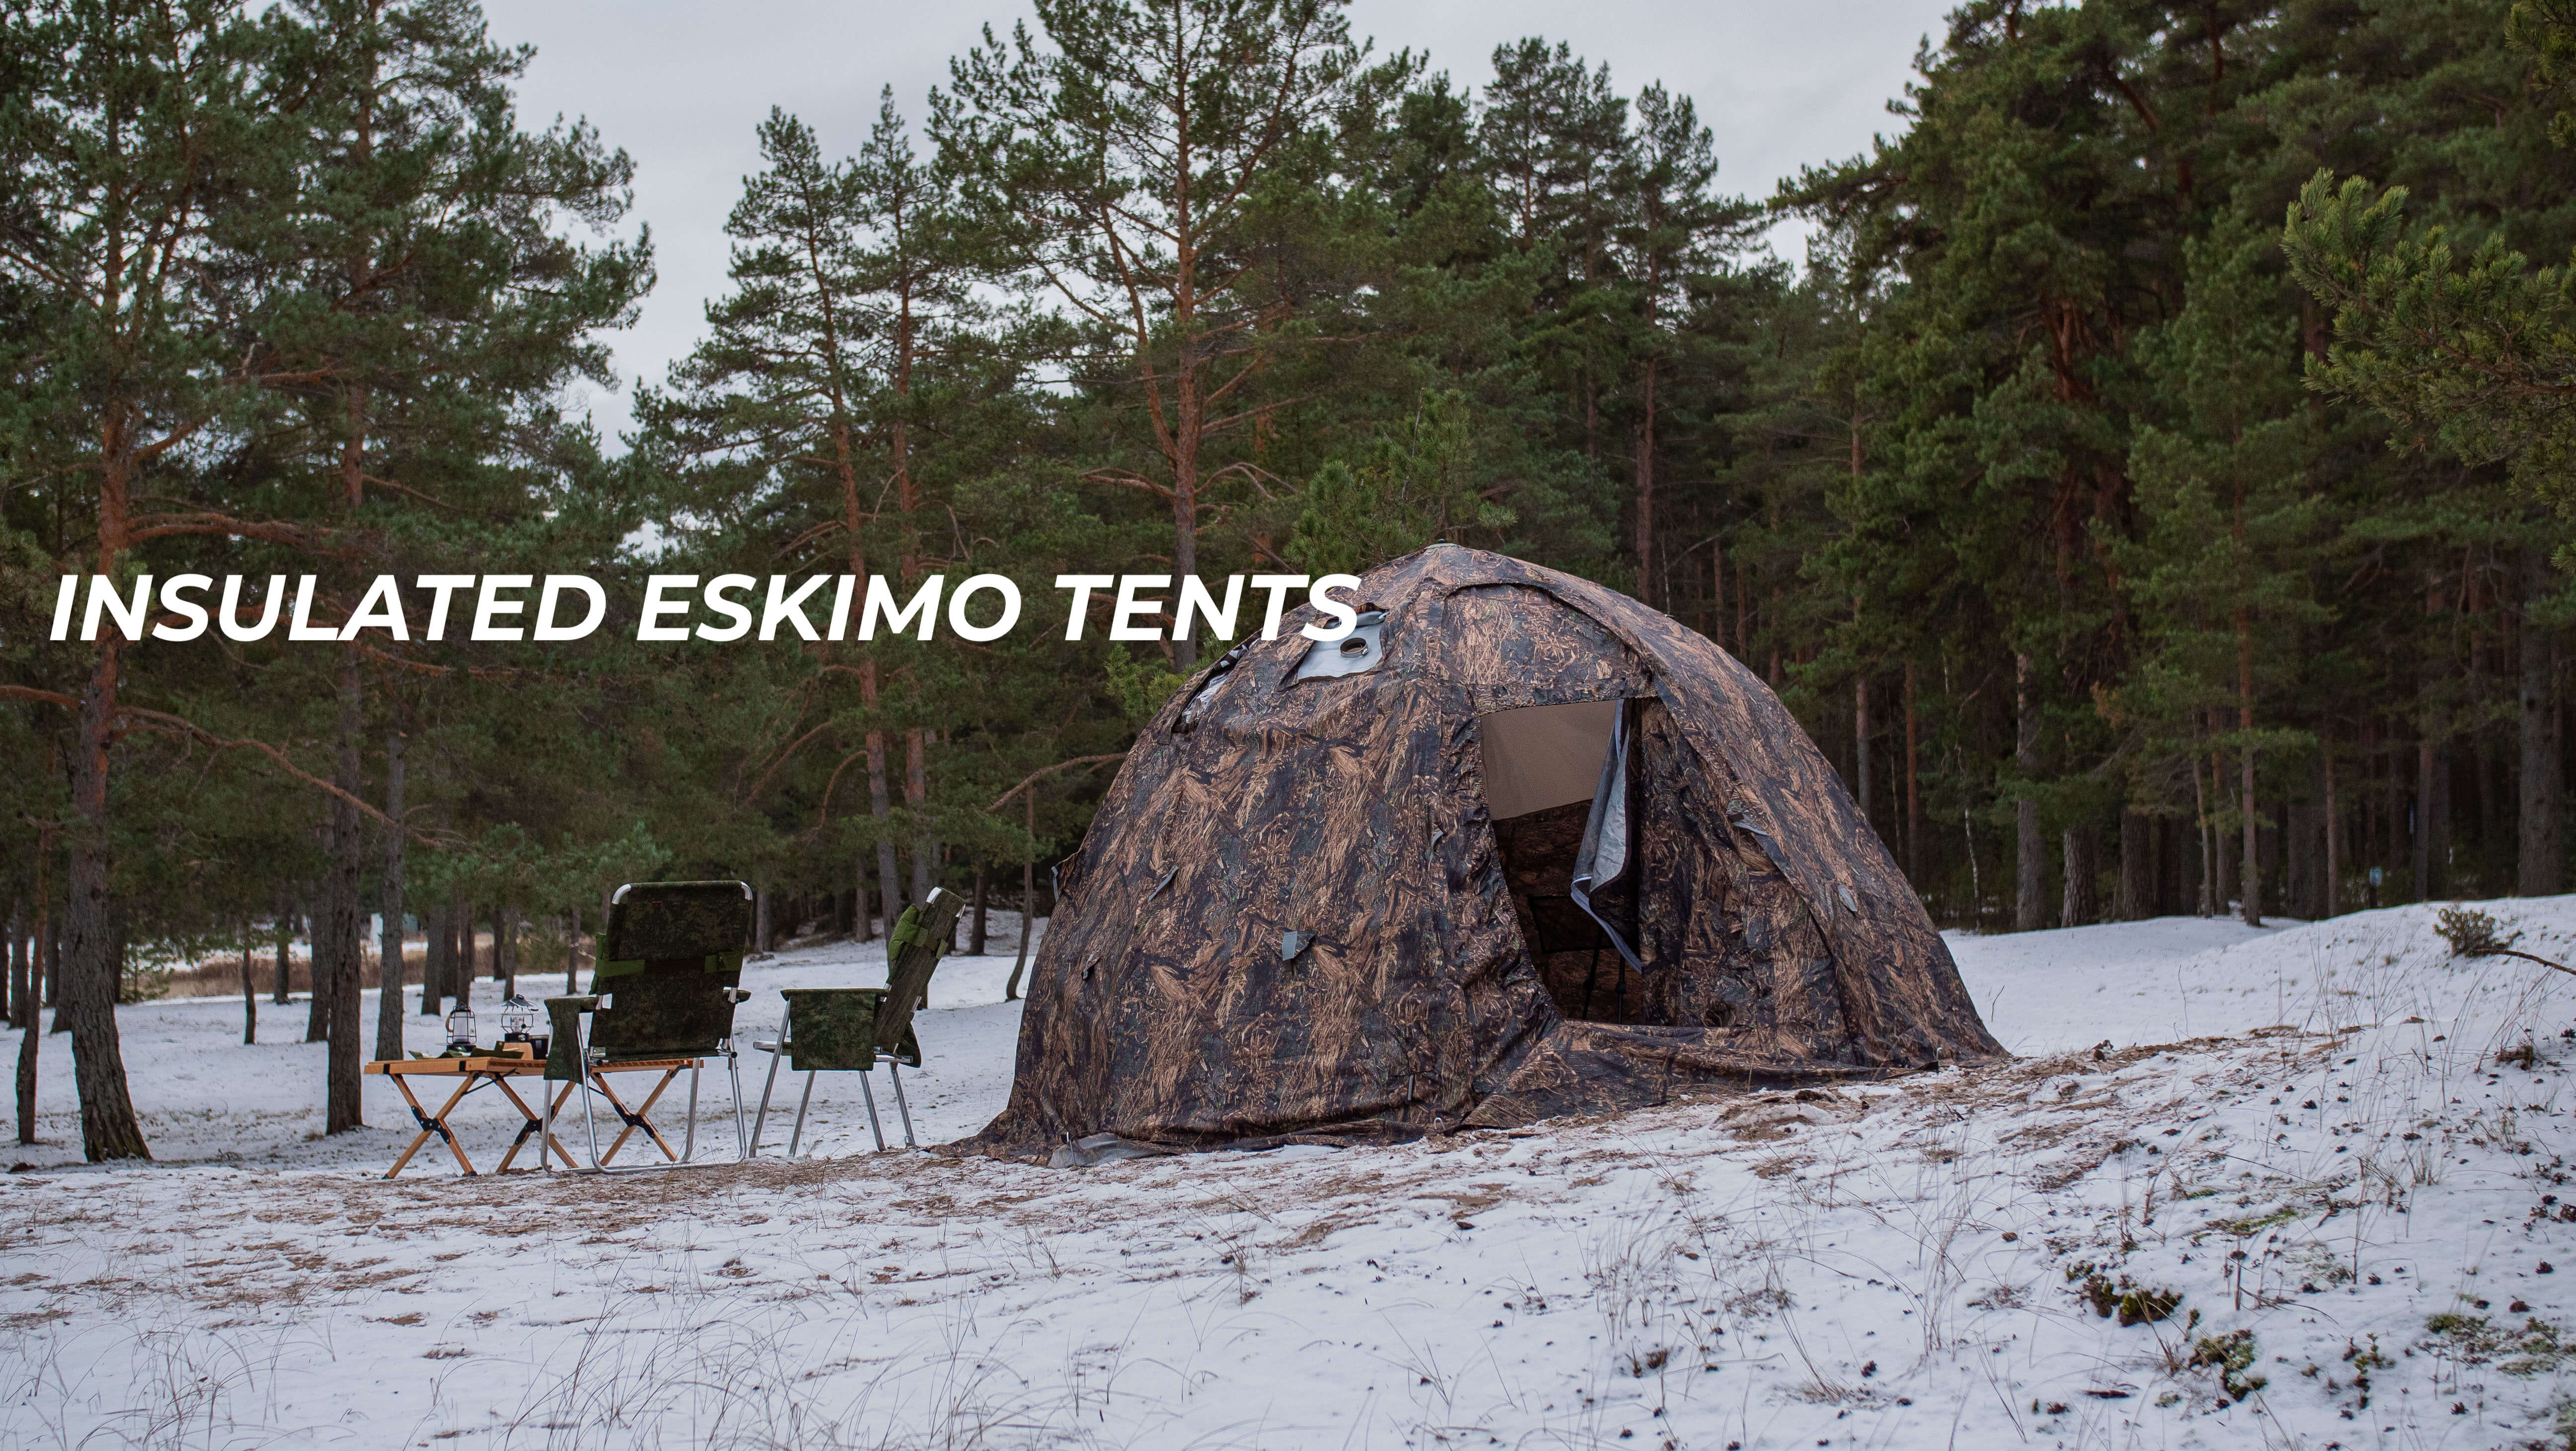 ️⃣ Insulated Eskimo tents